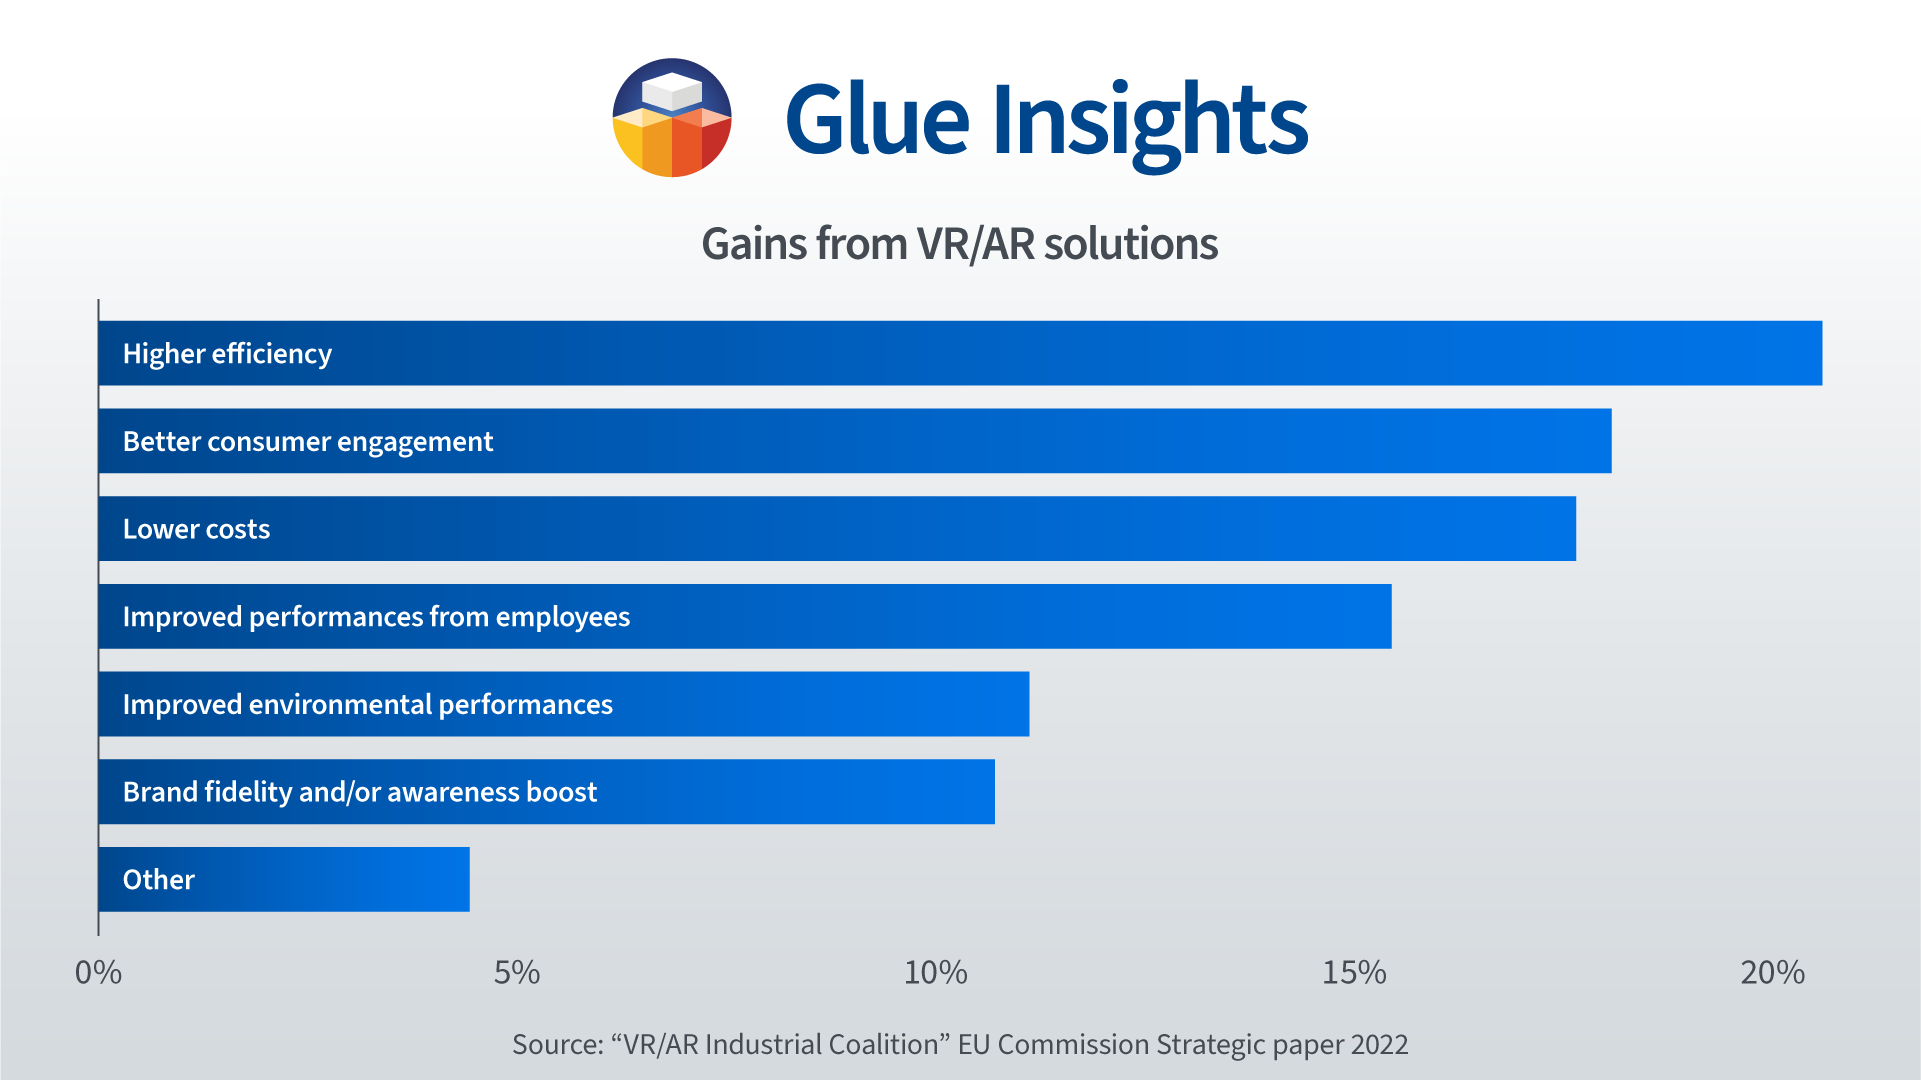 Glue insights gains of VR/XR